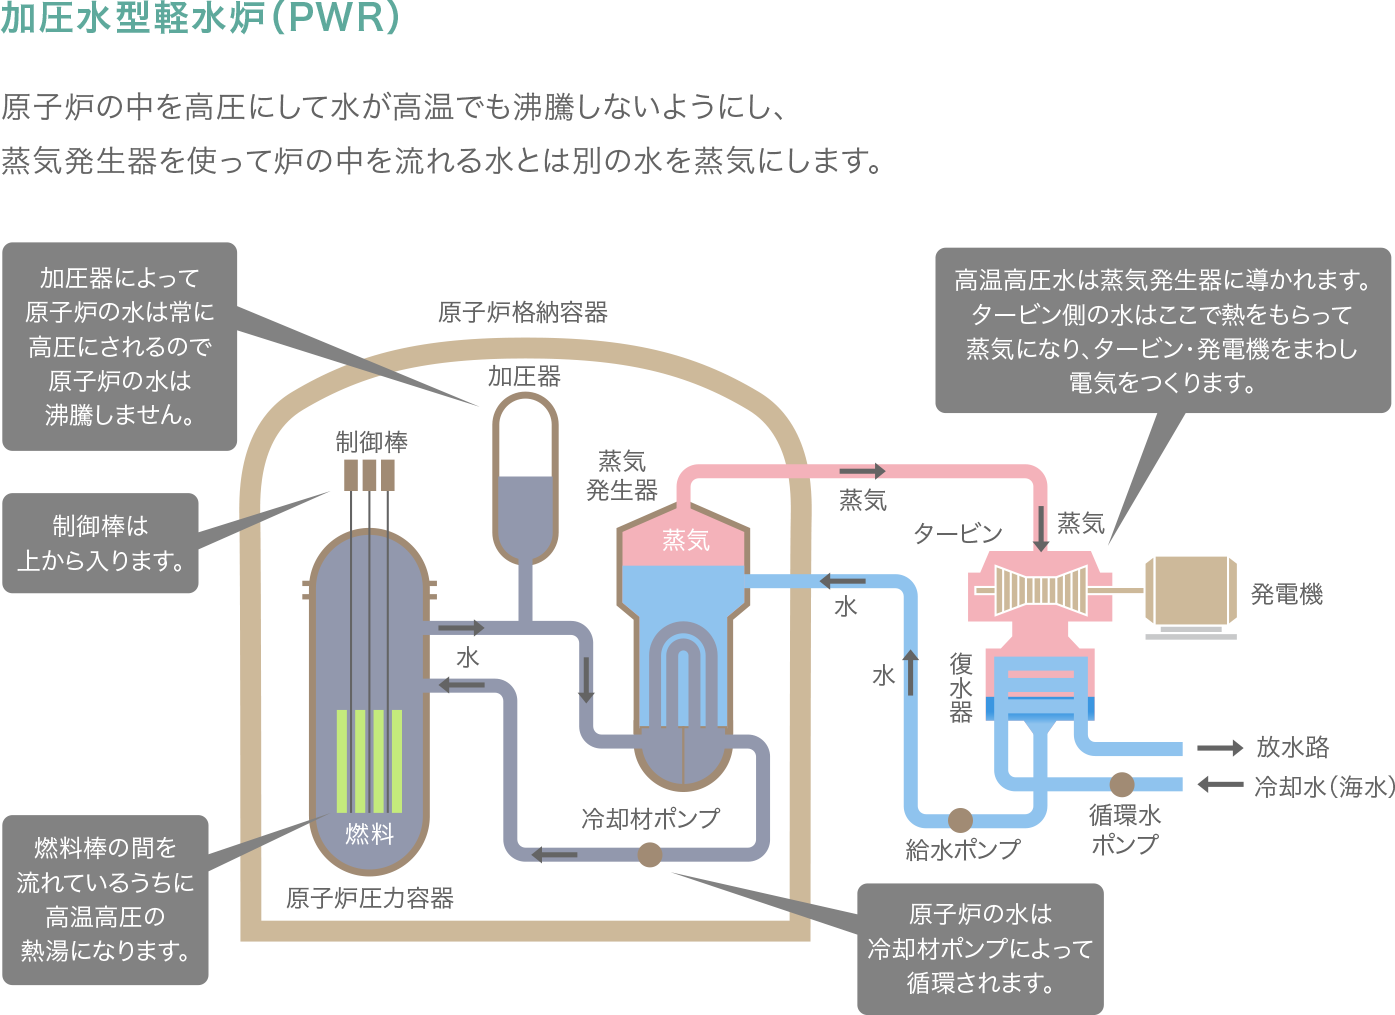 加圧水型軽水炉（PWR）の図